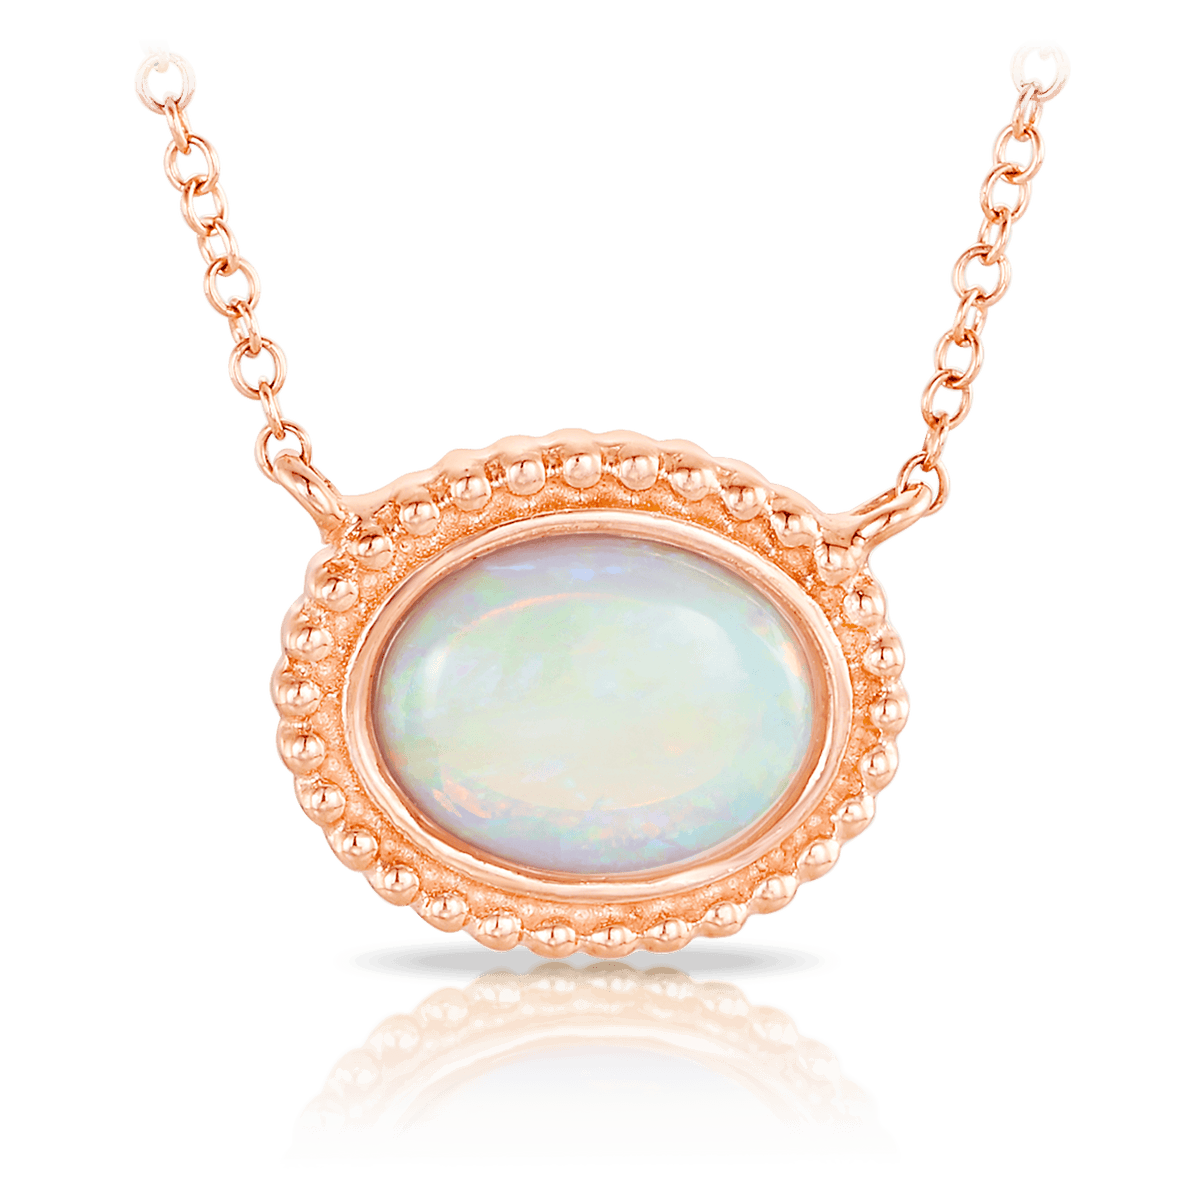 Bezel-Set Round Opal Solitaire Necklace | Angara